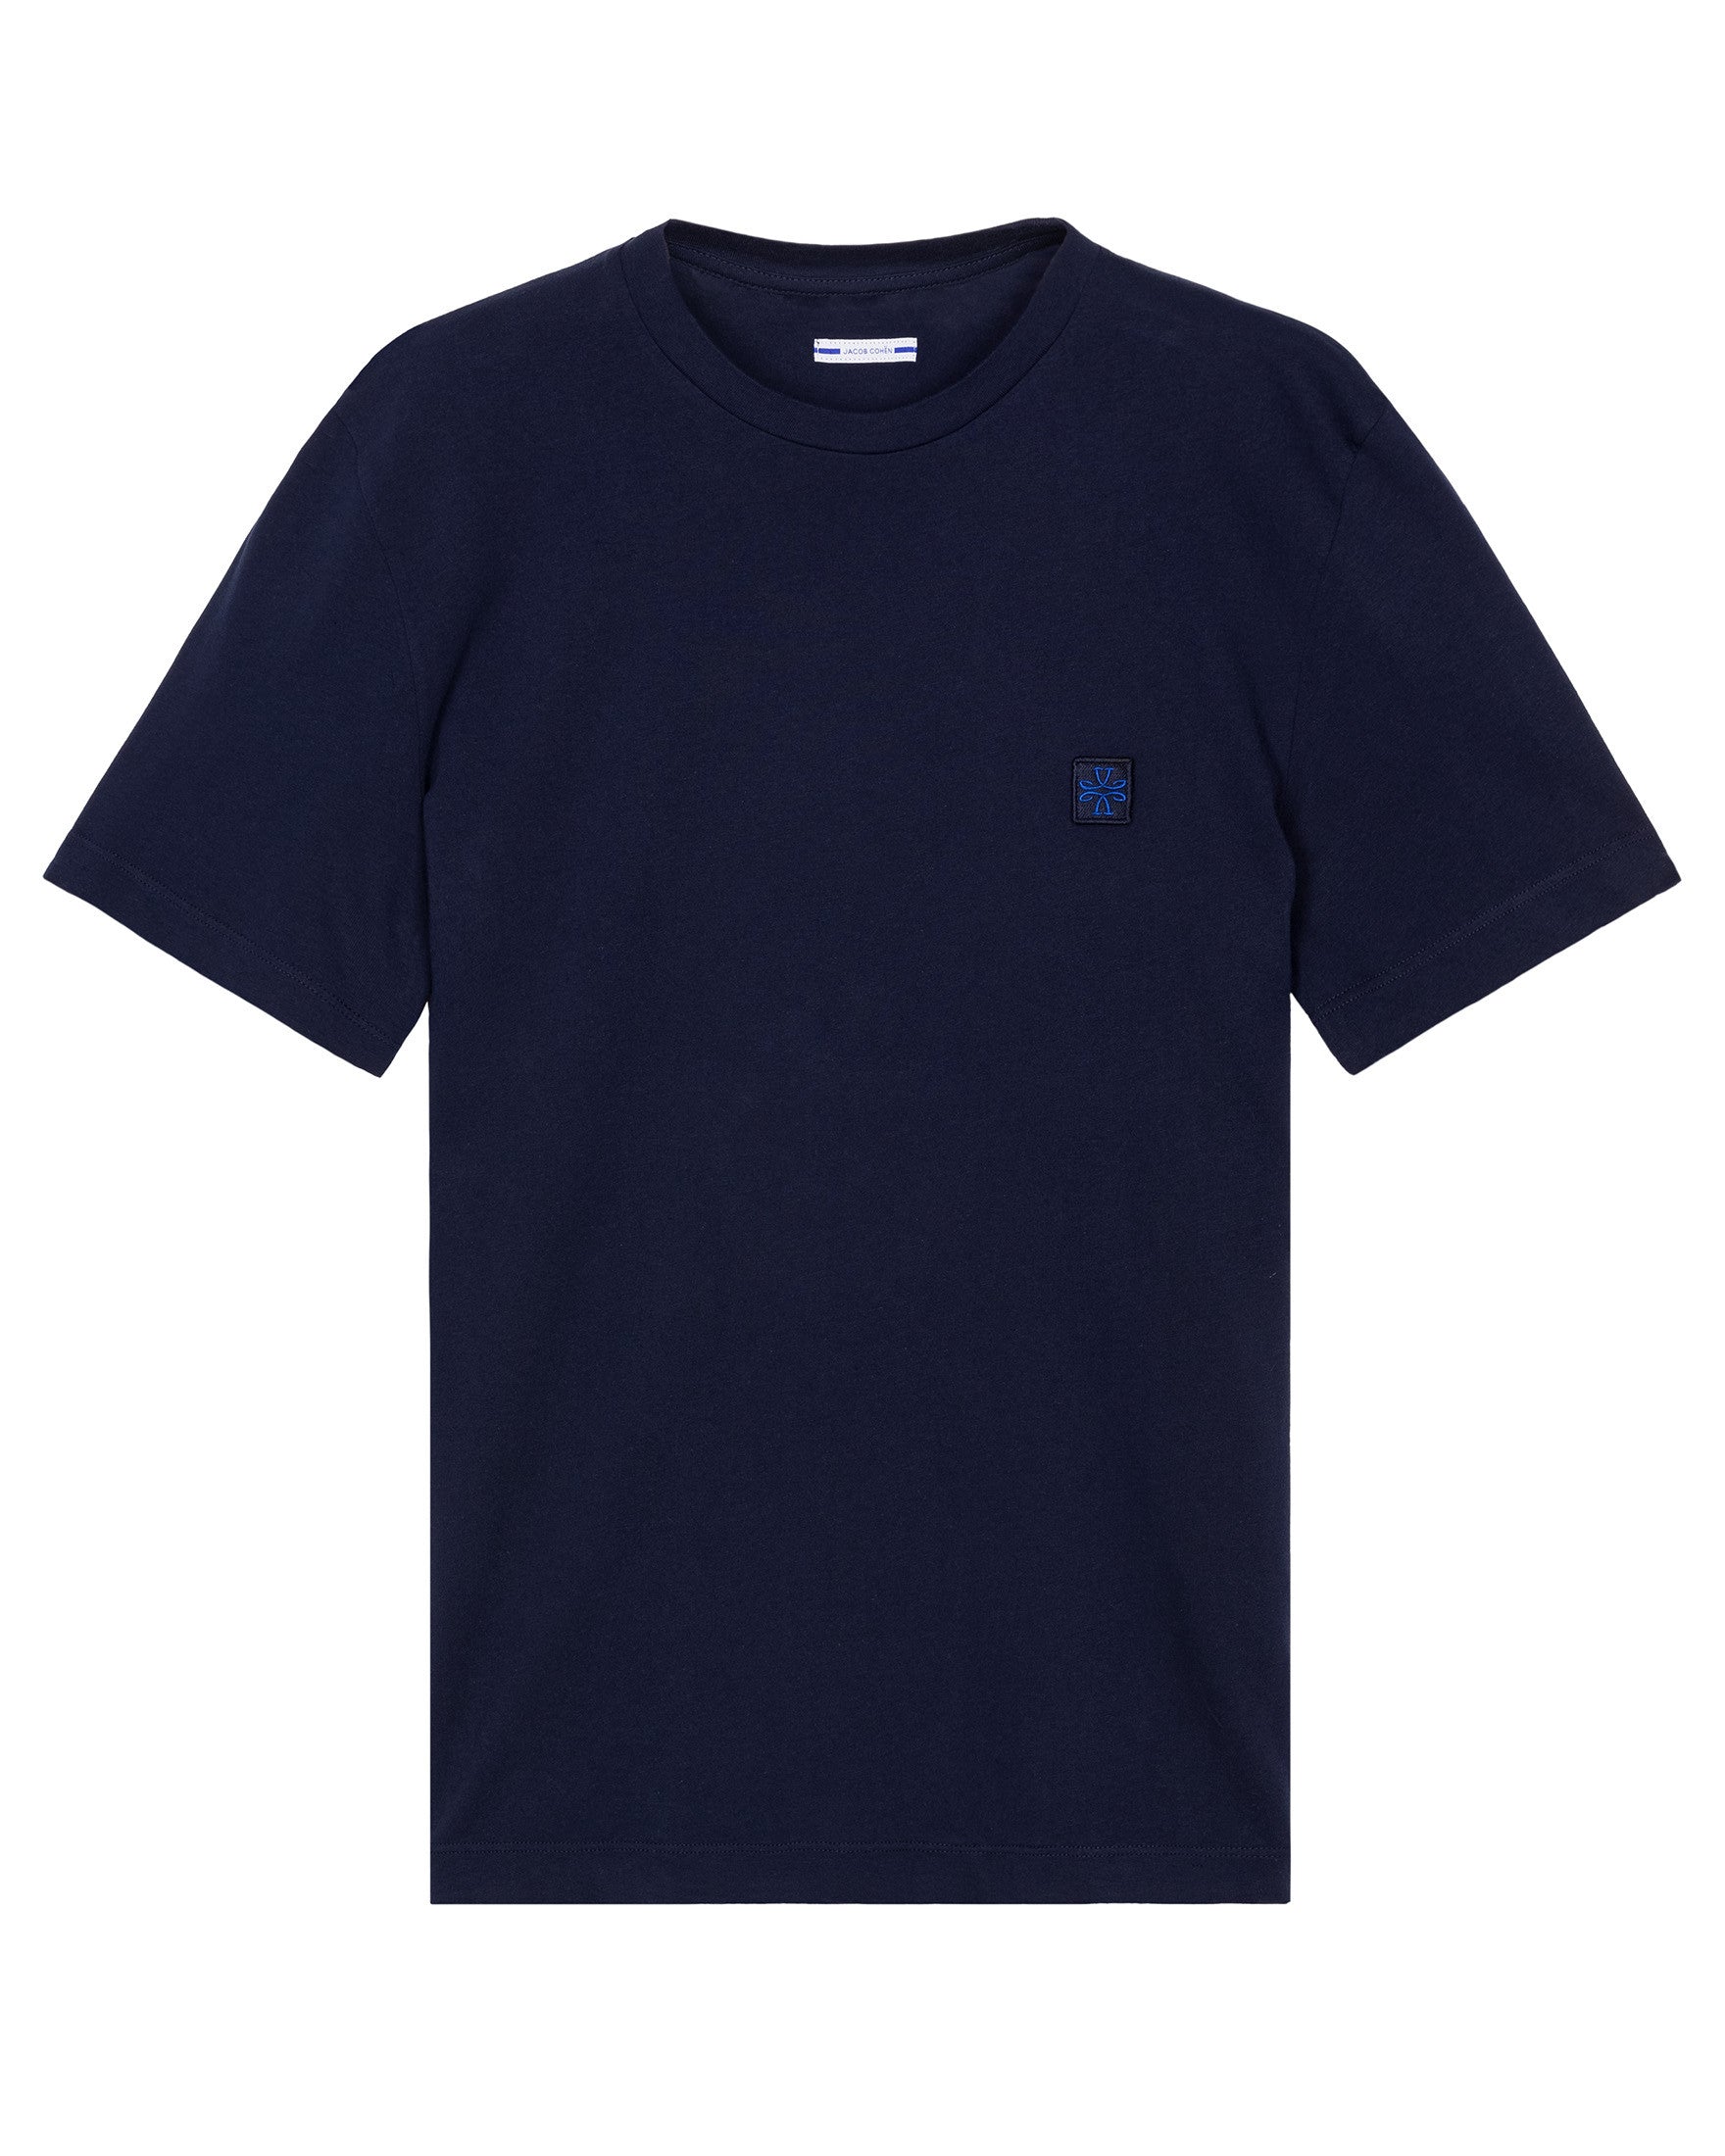 T Shirt Jacob Cohen navy blue